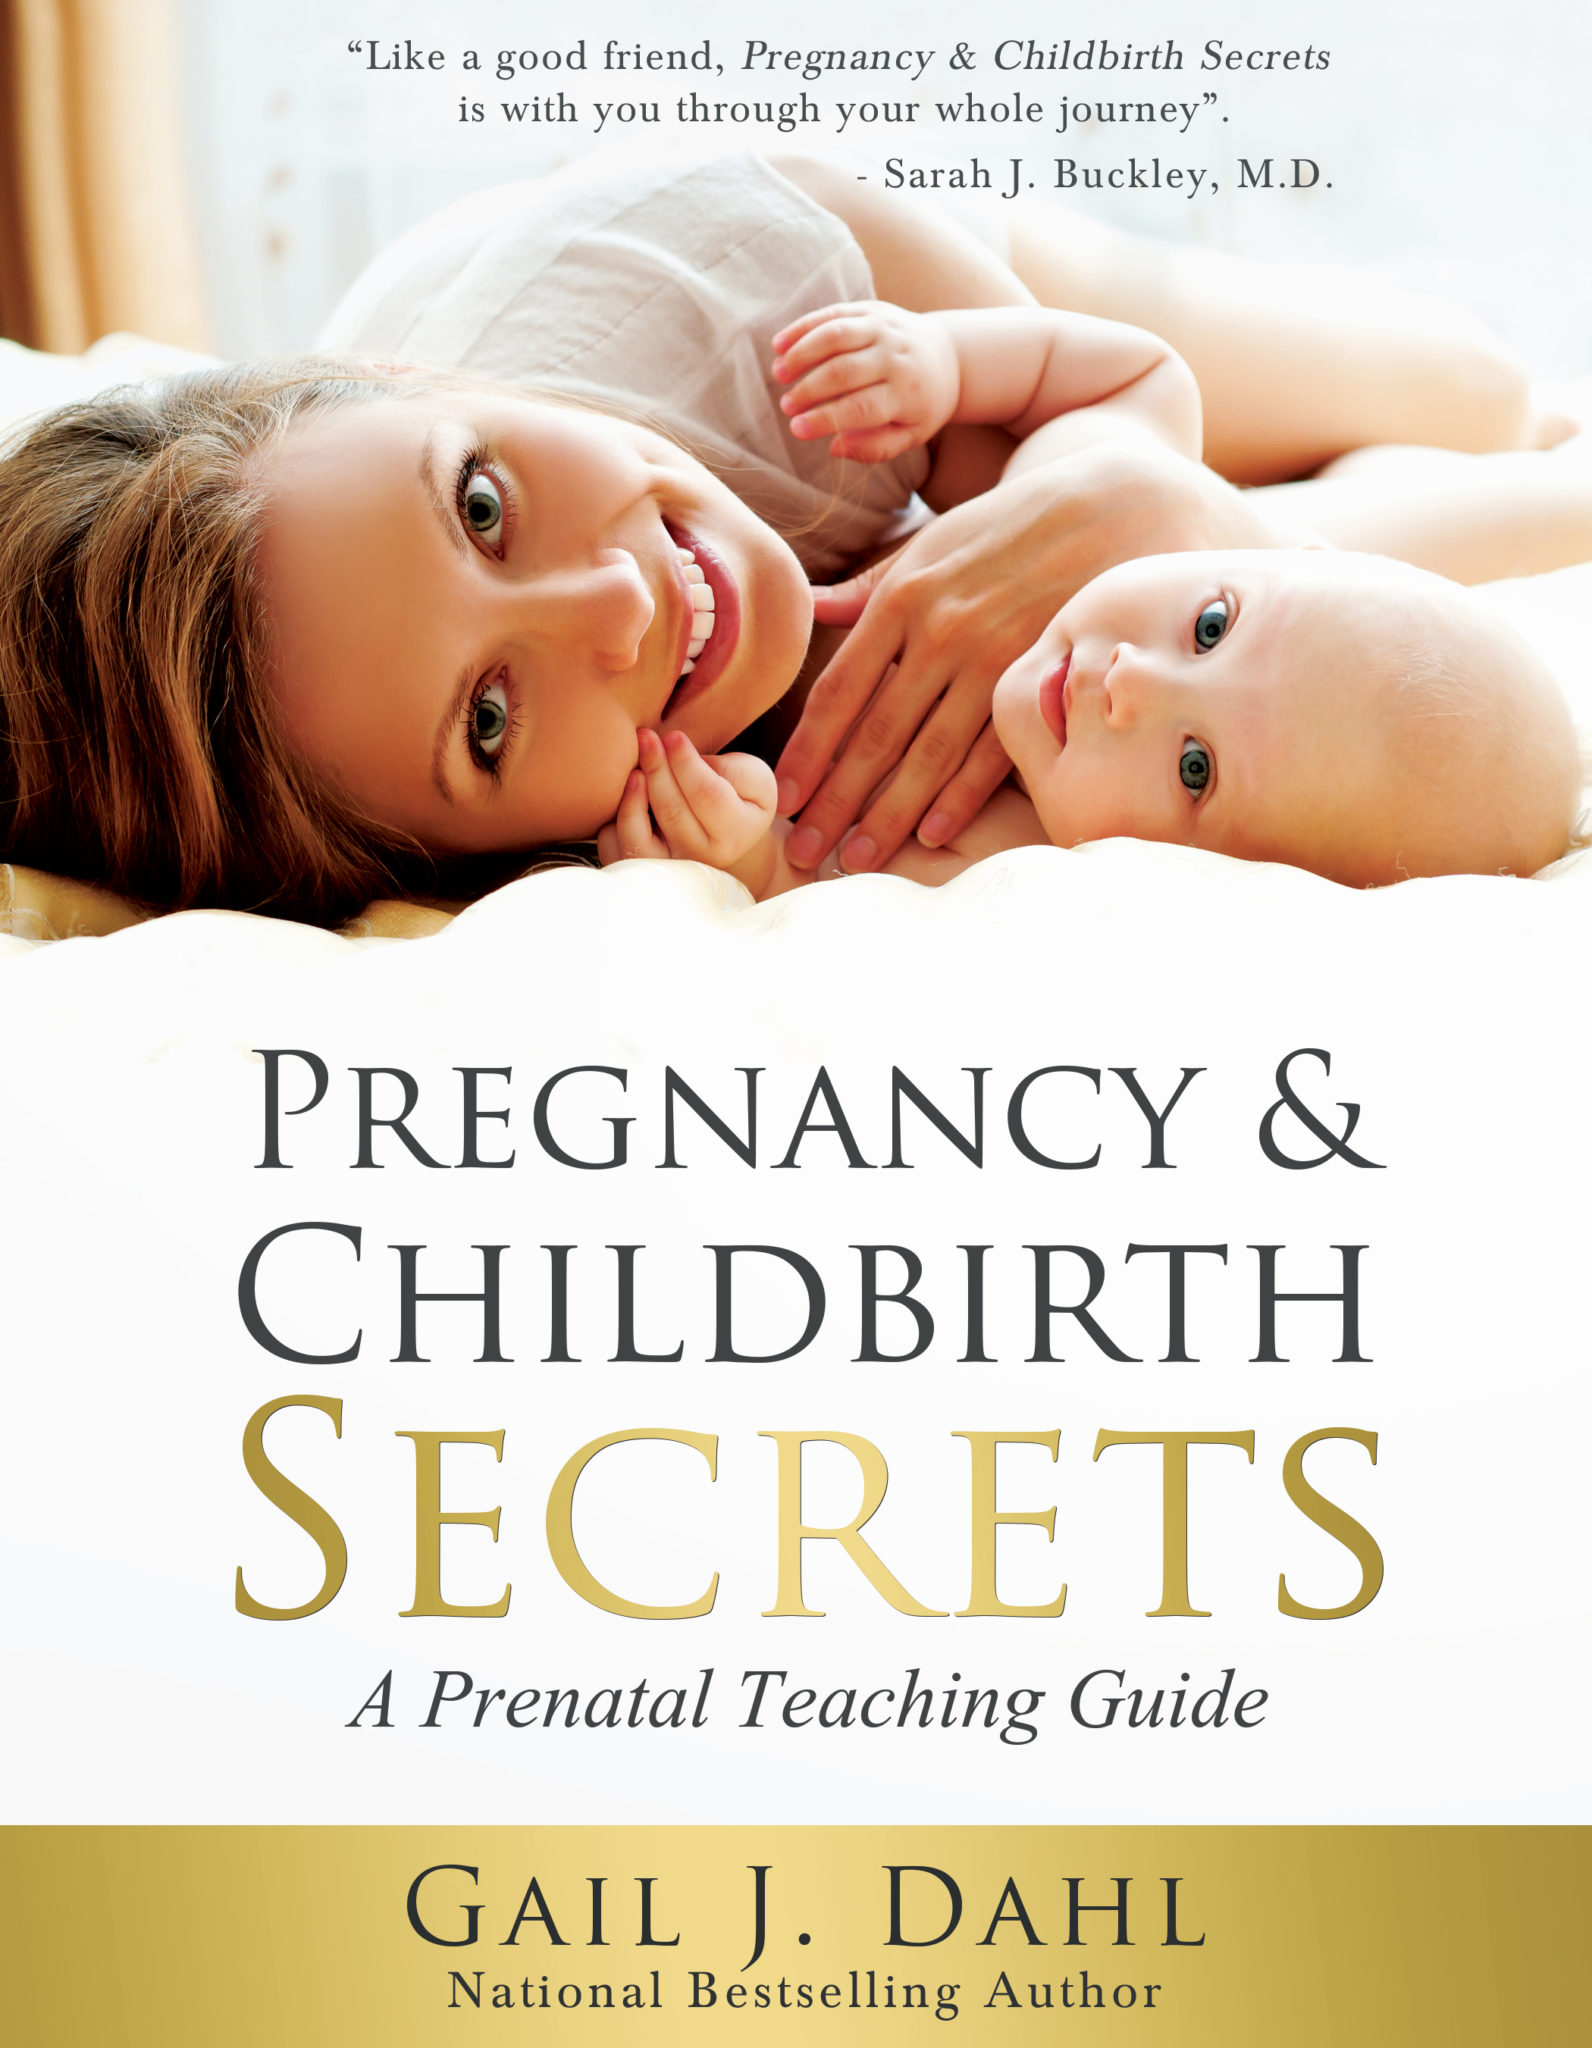 FREE: Pregnancy & Childbirth Secrets by Gail J. Dahl